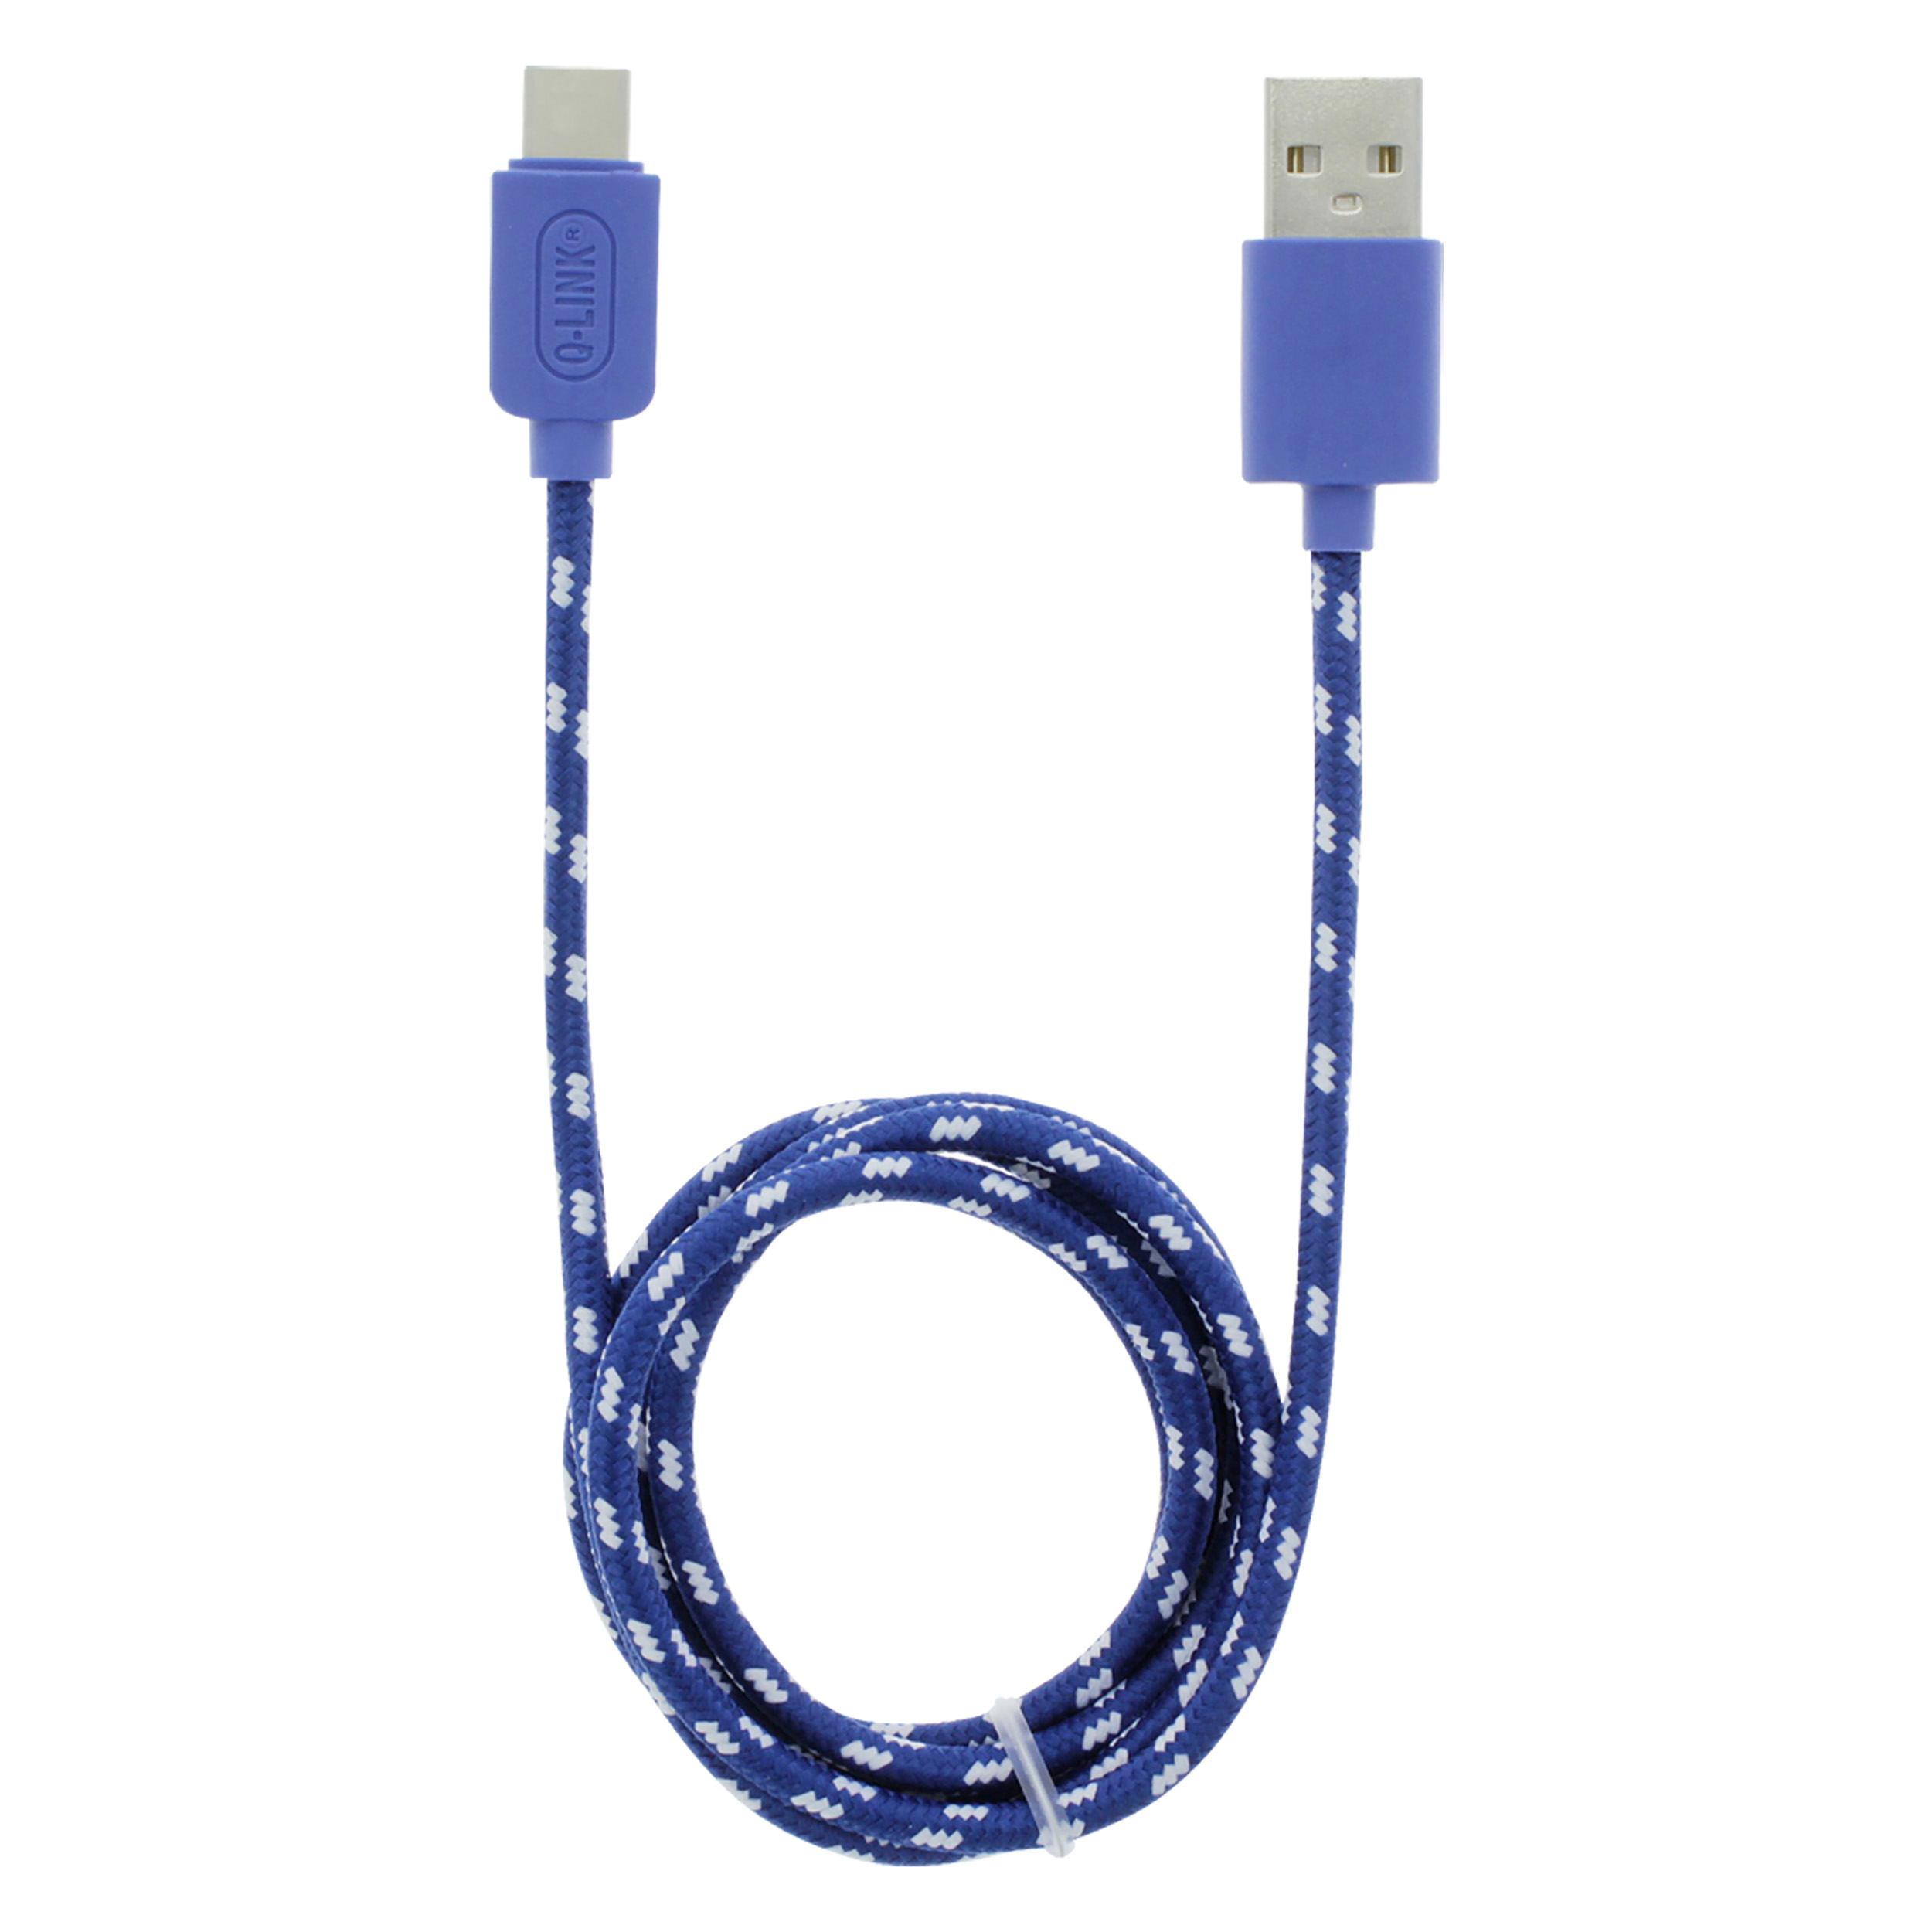 00.137.14 Q-Link  datakabel USB - Type C - 1 m - blauw/wit